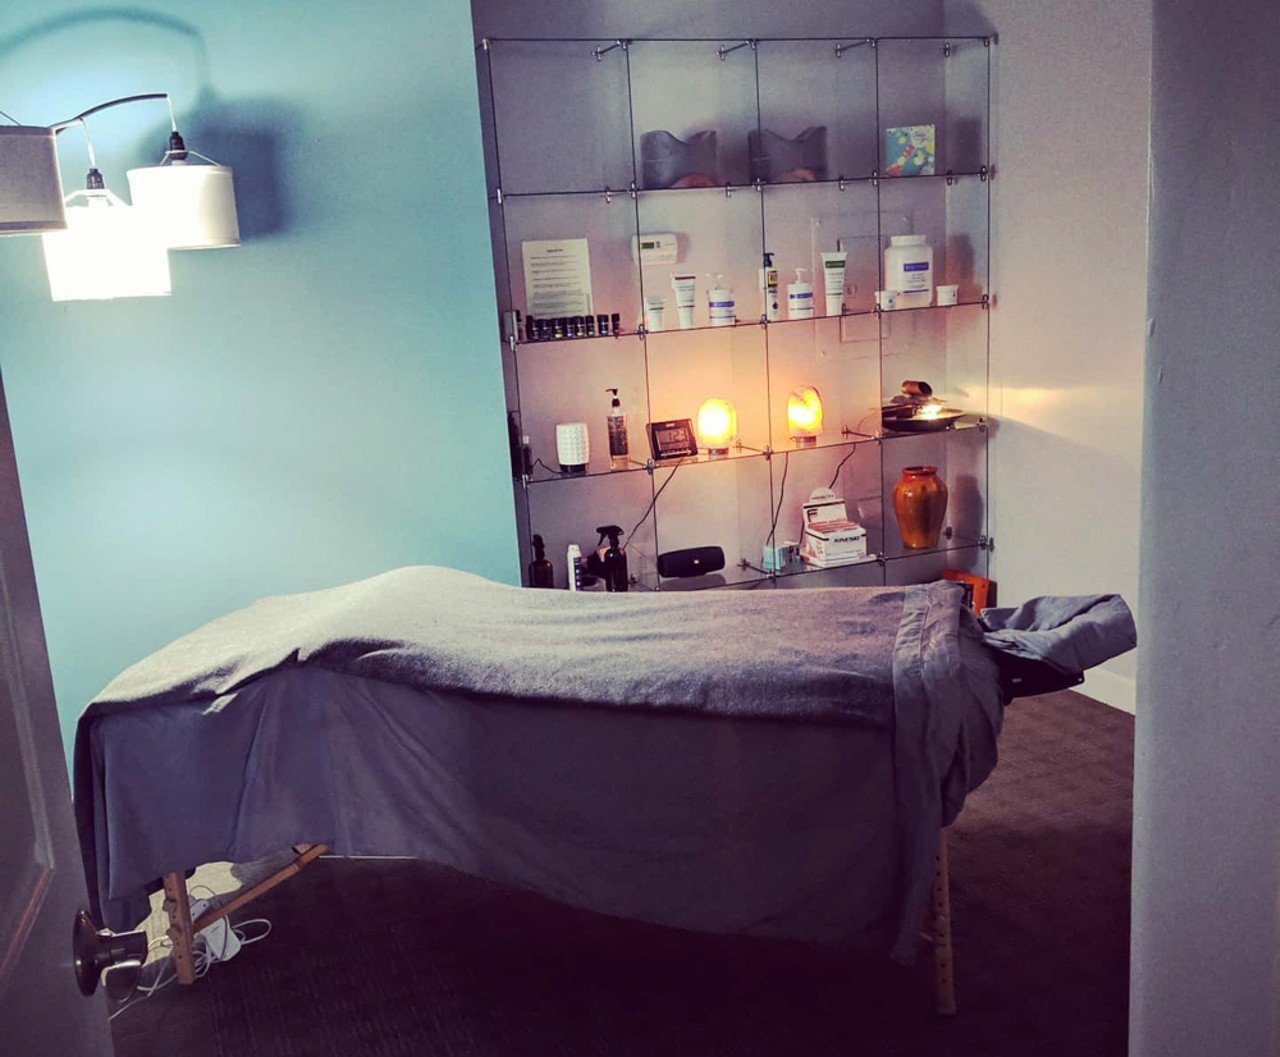 Get a massage 
Also self-explanatory.
Photo via massageonmellwood/Instagram